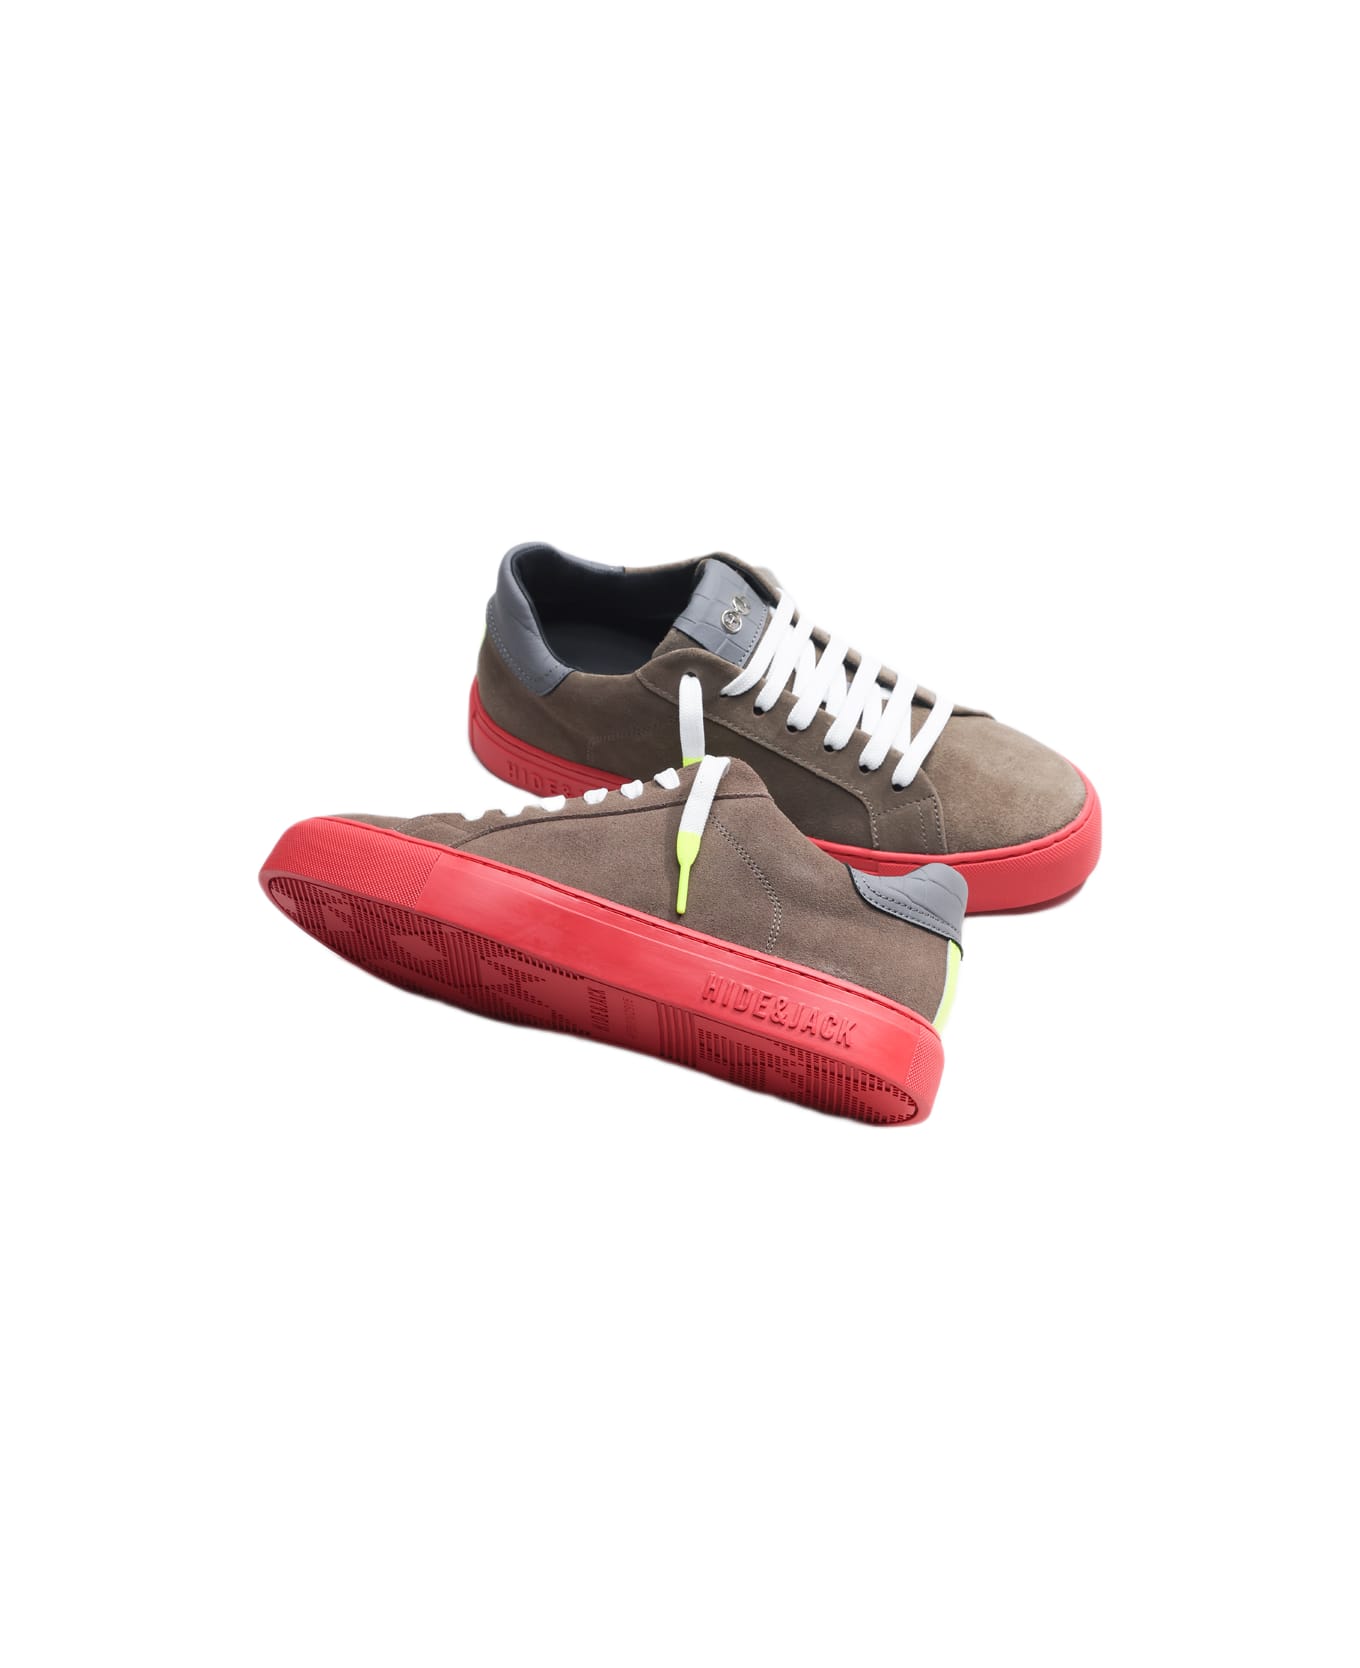 Hide&Jack Low Top Sneaker - Essence Oil Beige Red